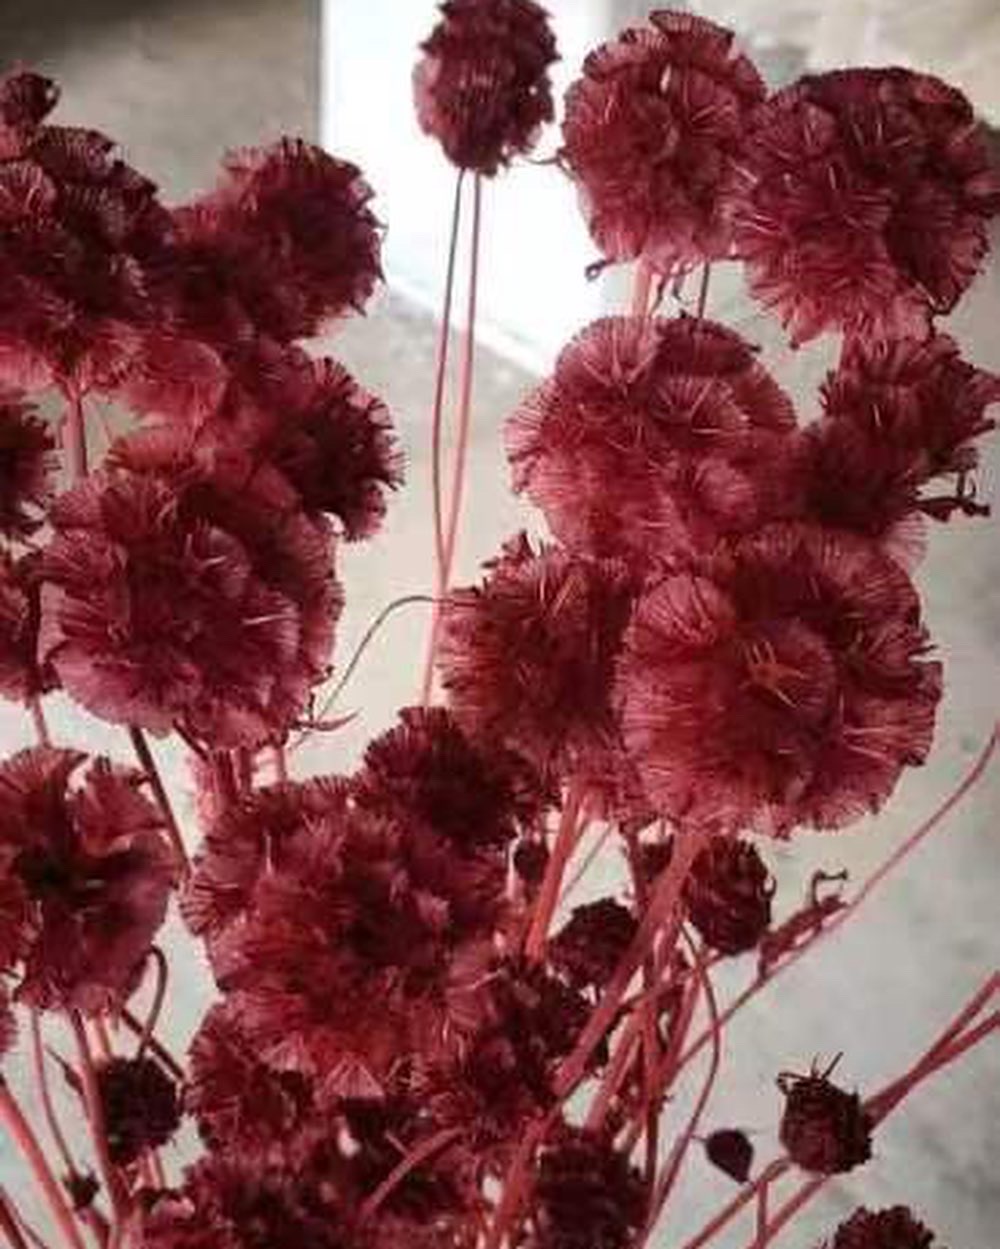 Scabiosa röd 10st - Konserverade blommor & blad